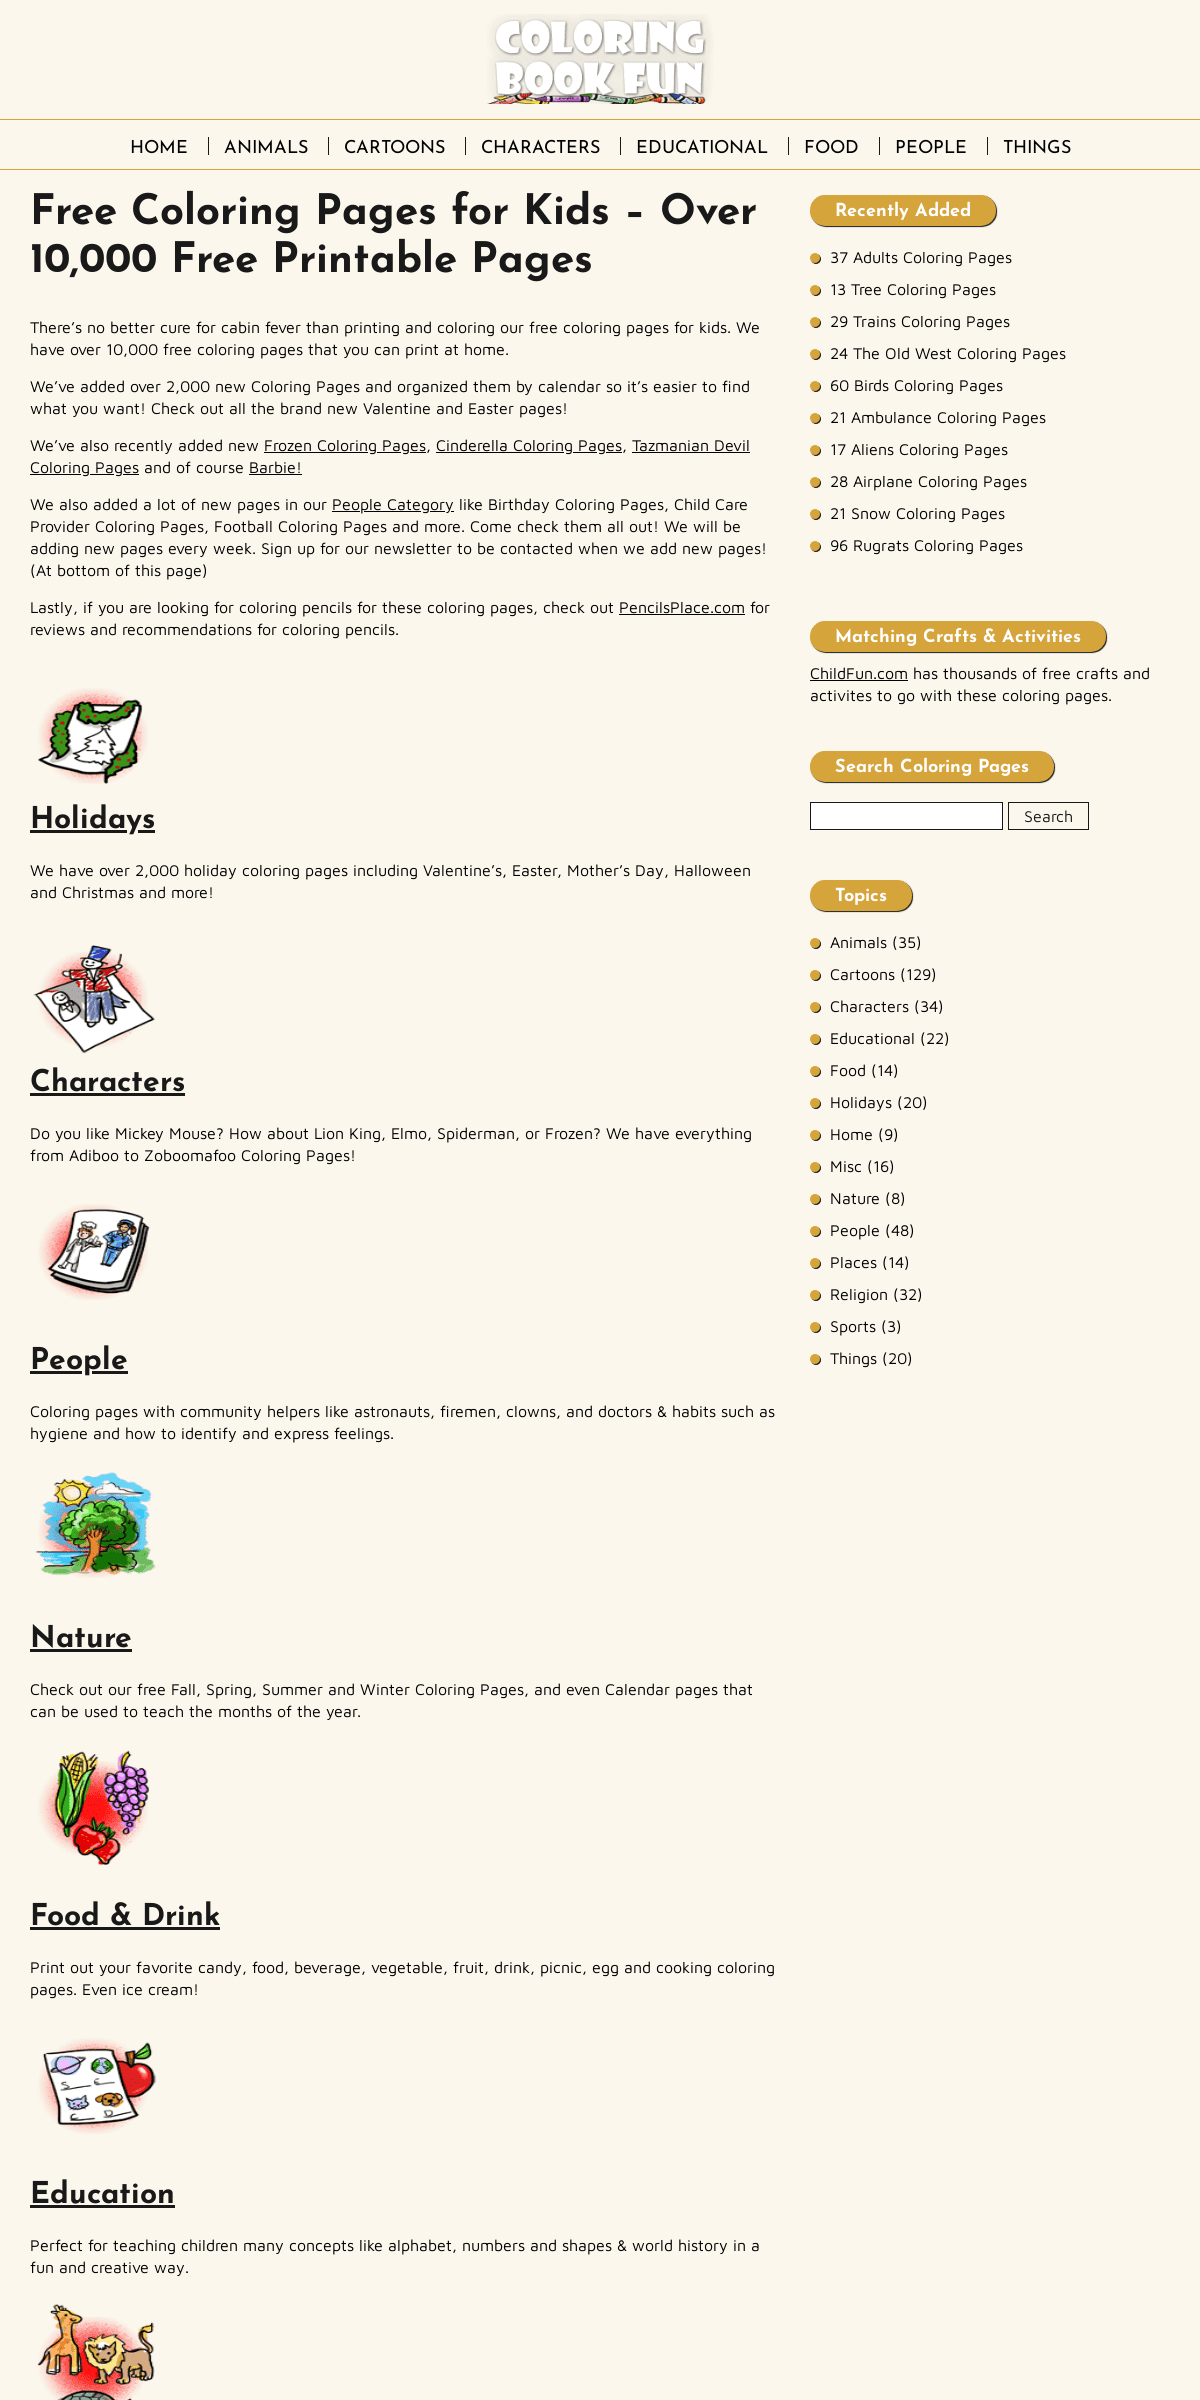 A complete backup of coloringbookfun.com